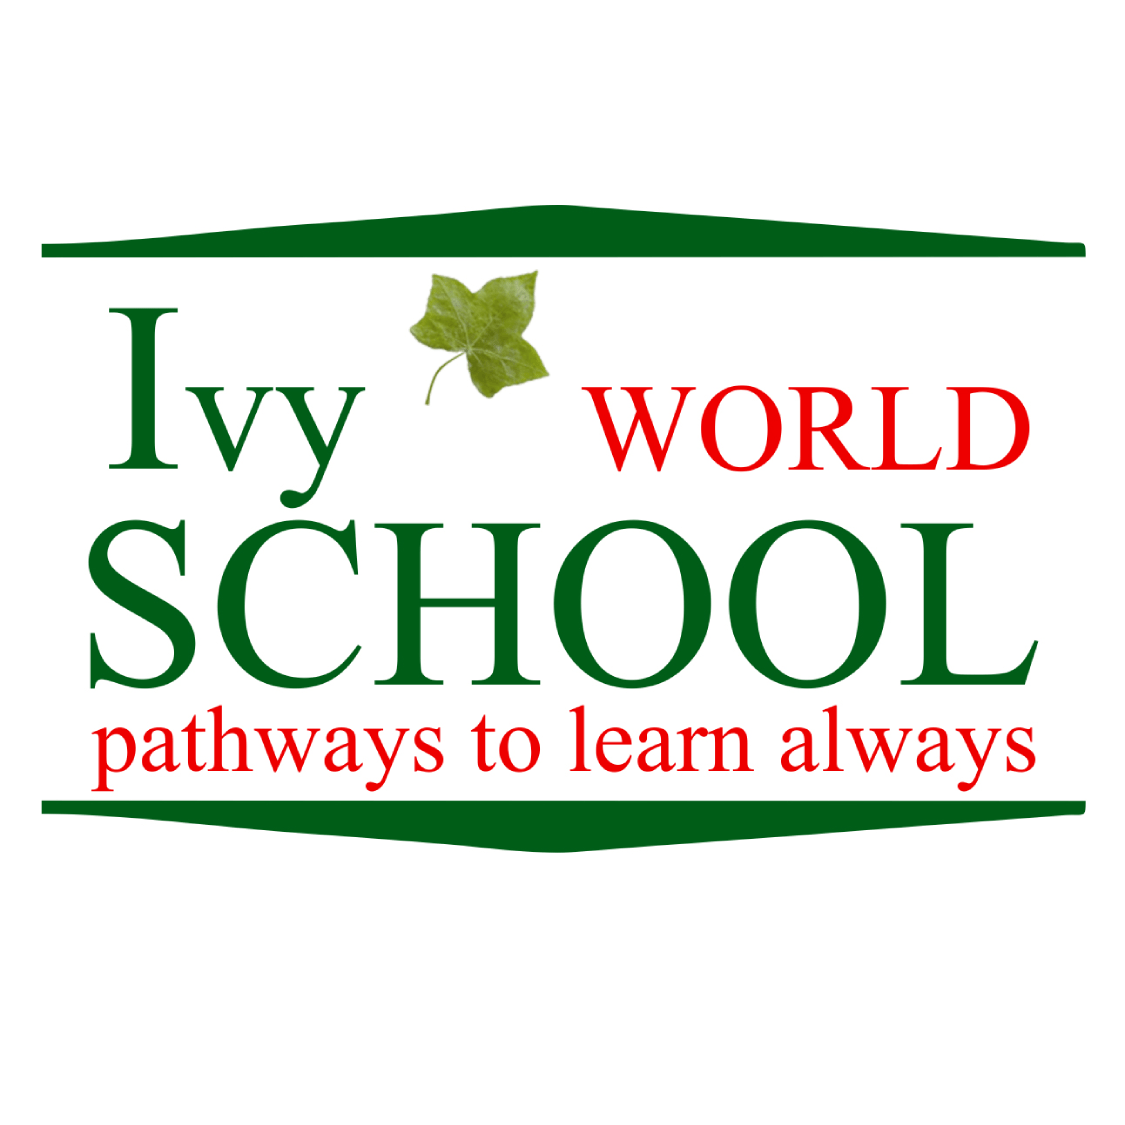 Ivy world school